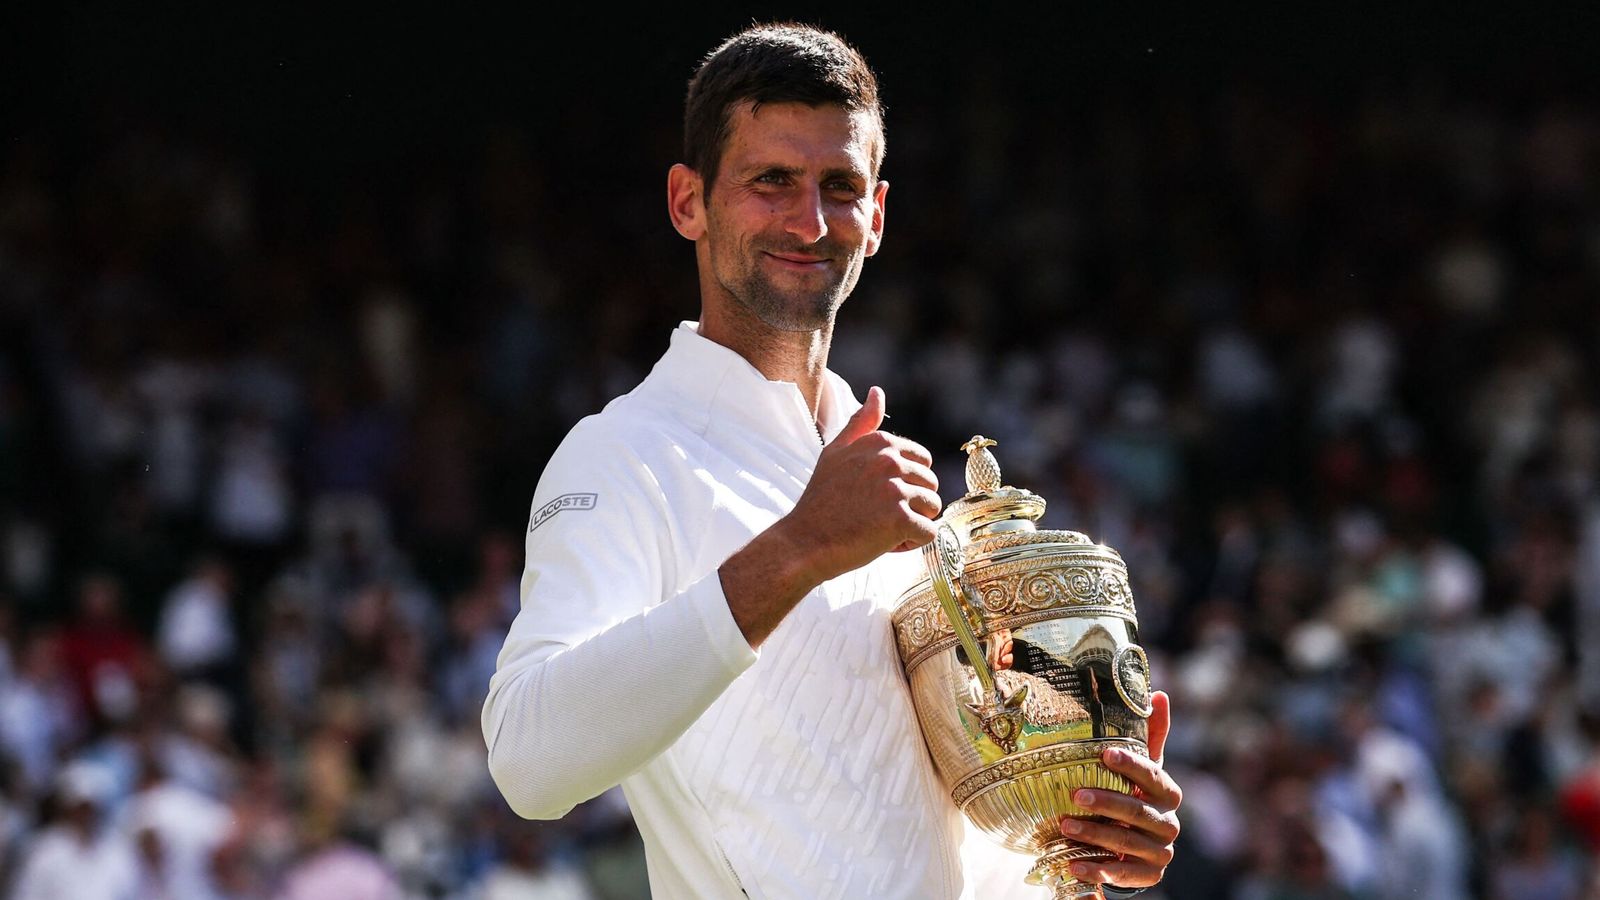 Novak Djokovic: How the iron man of tennis moved one behind Rafael Nadal’s mark of 22 Grand Slams